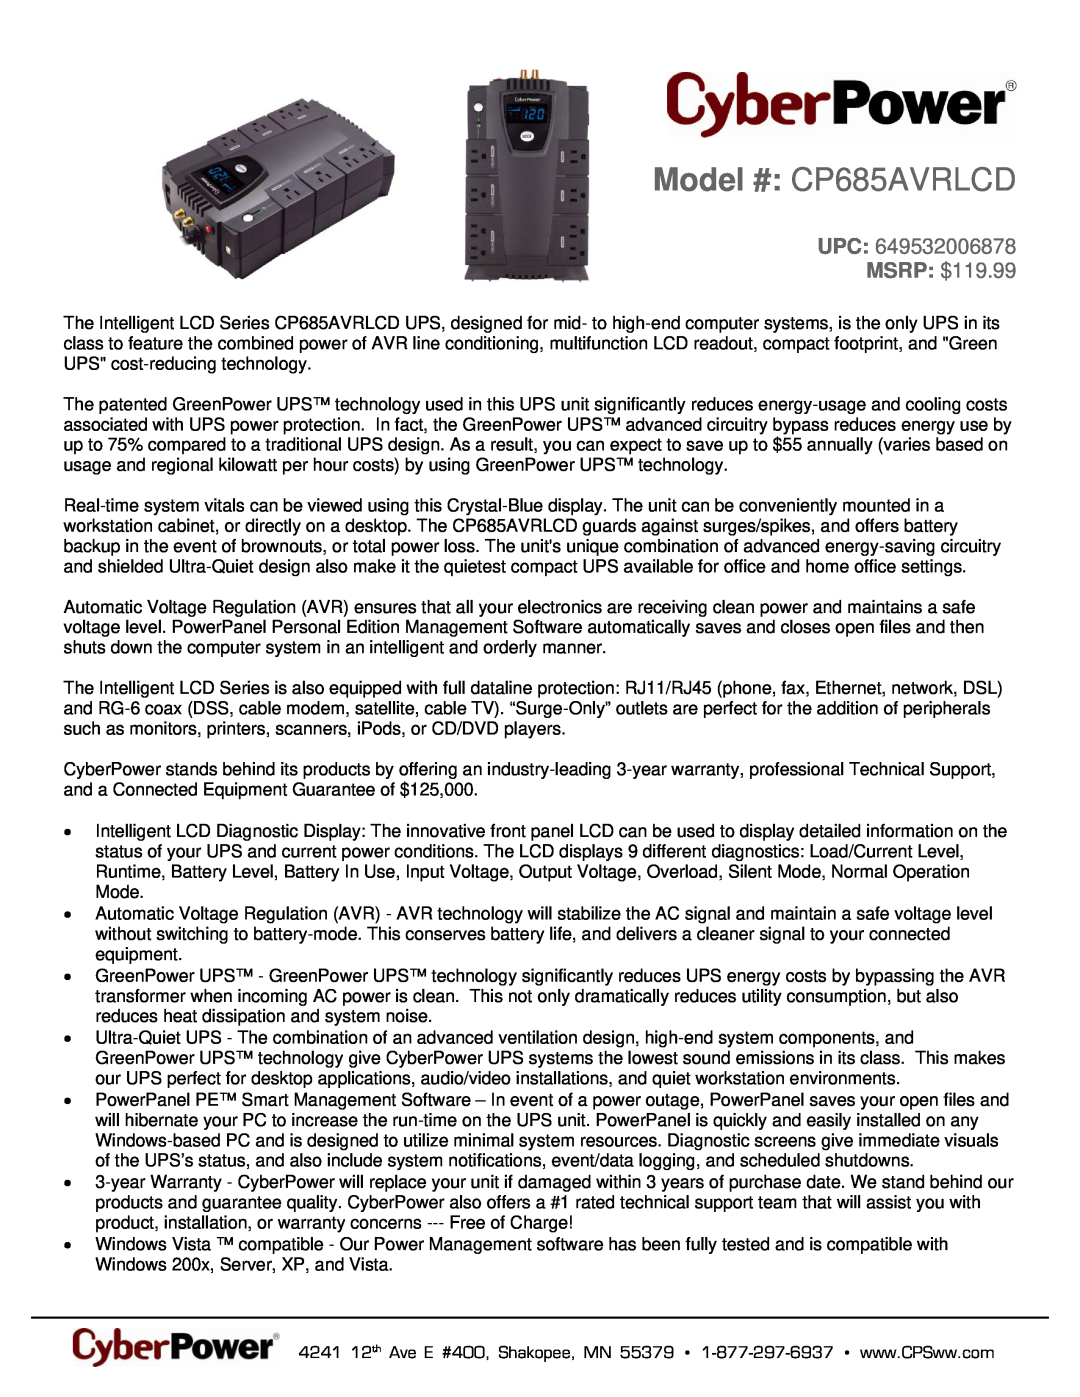 CyberPower Systems 649532006878 warranty Model # CP685AVRLCD, UPC MSRP $119.99 